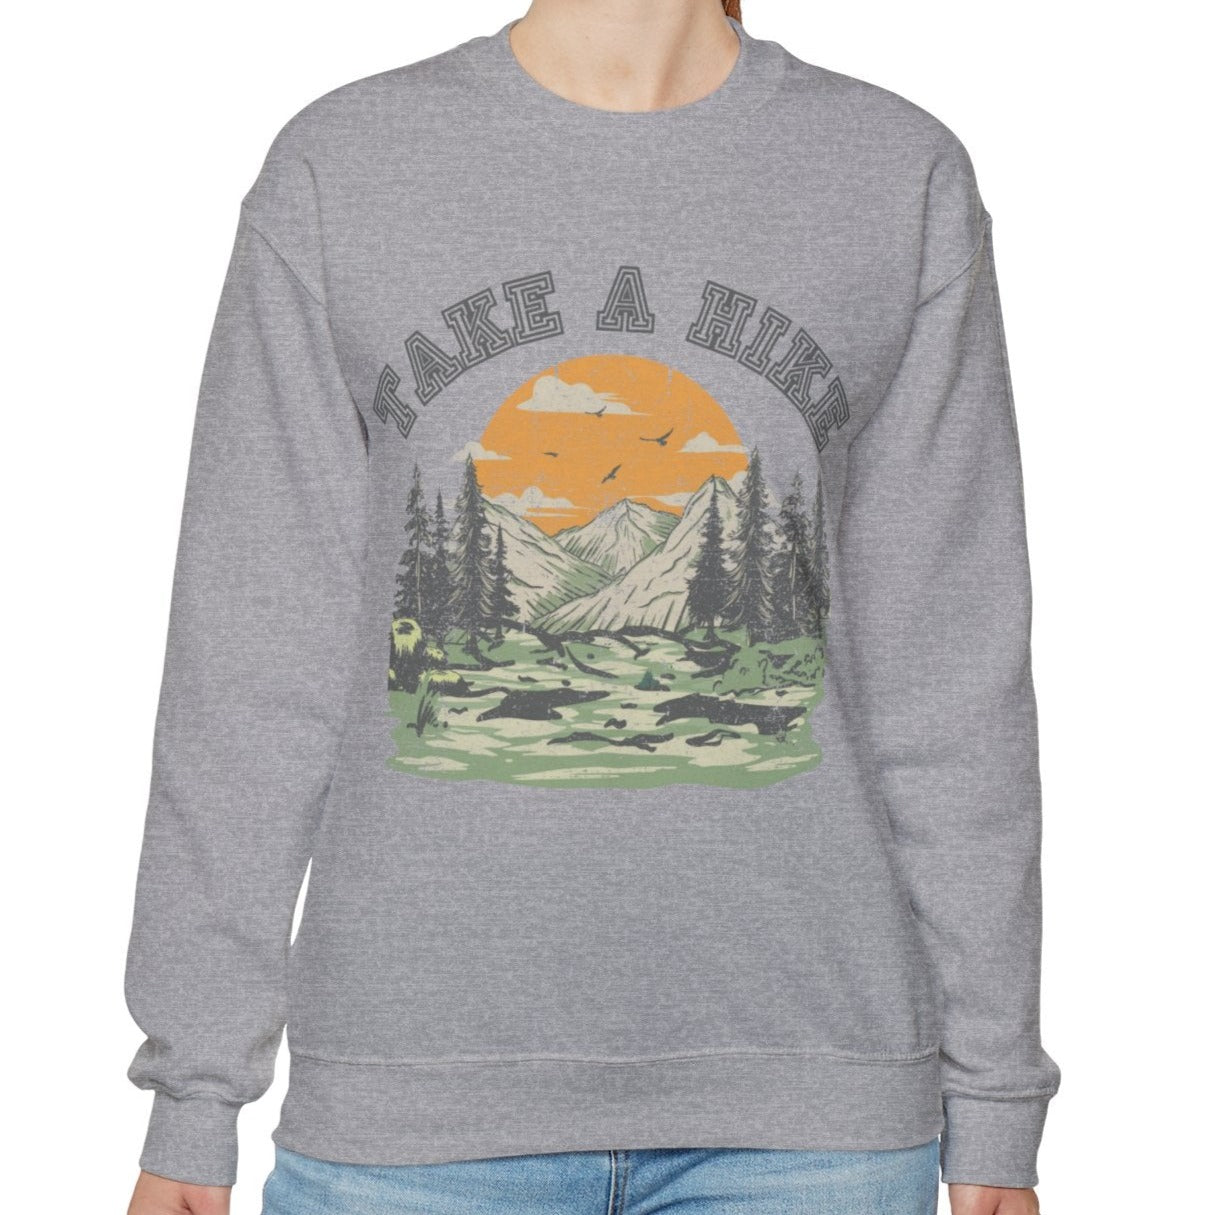 Take a Hike Sunrise Women's Sweatshirt: Nature Lover's Delight - Eddy and Rita